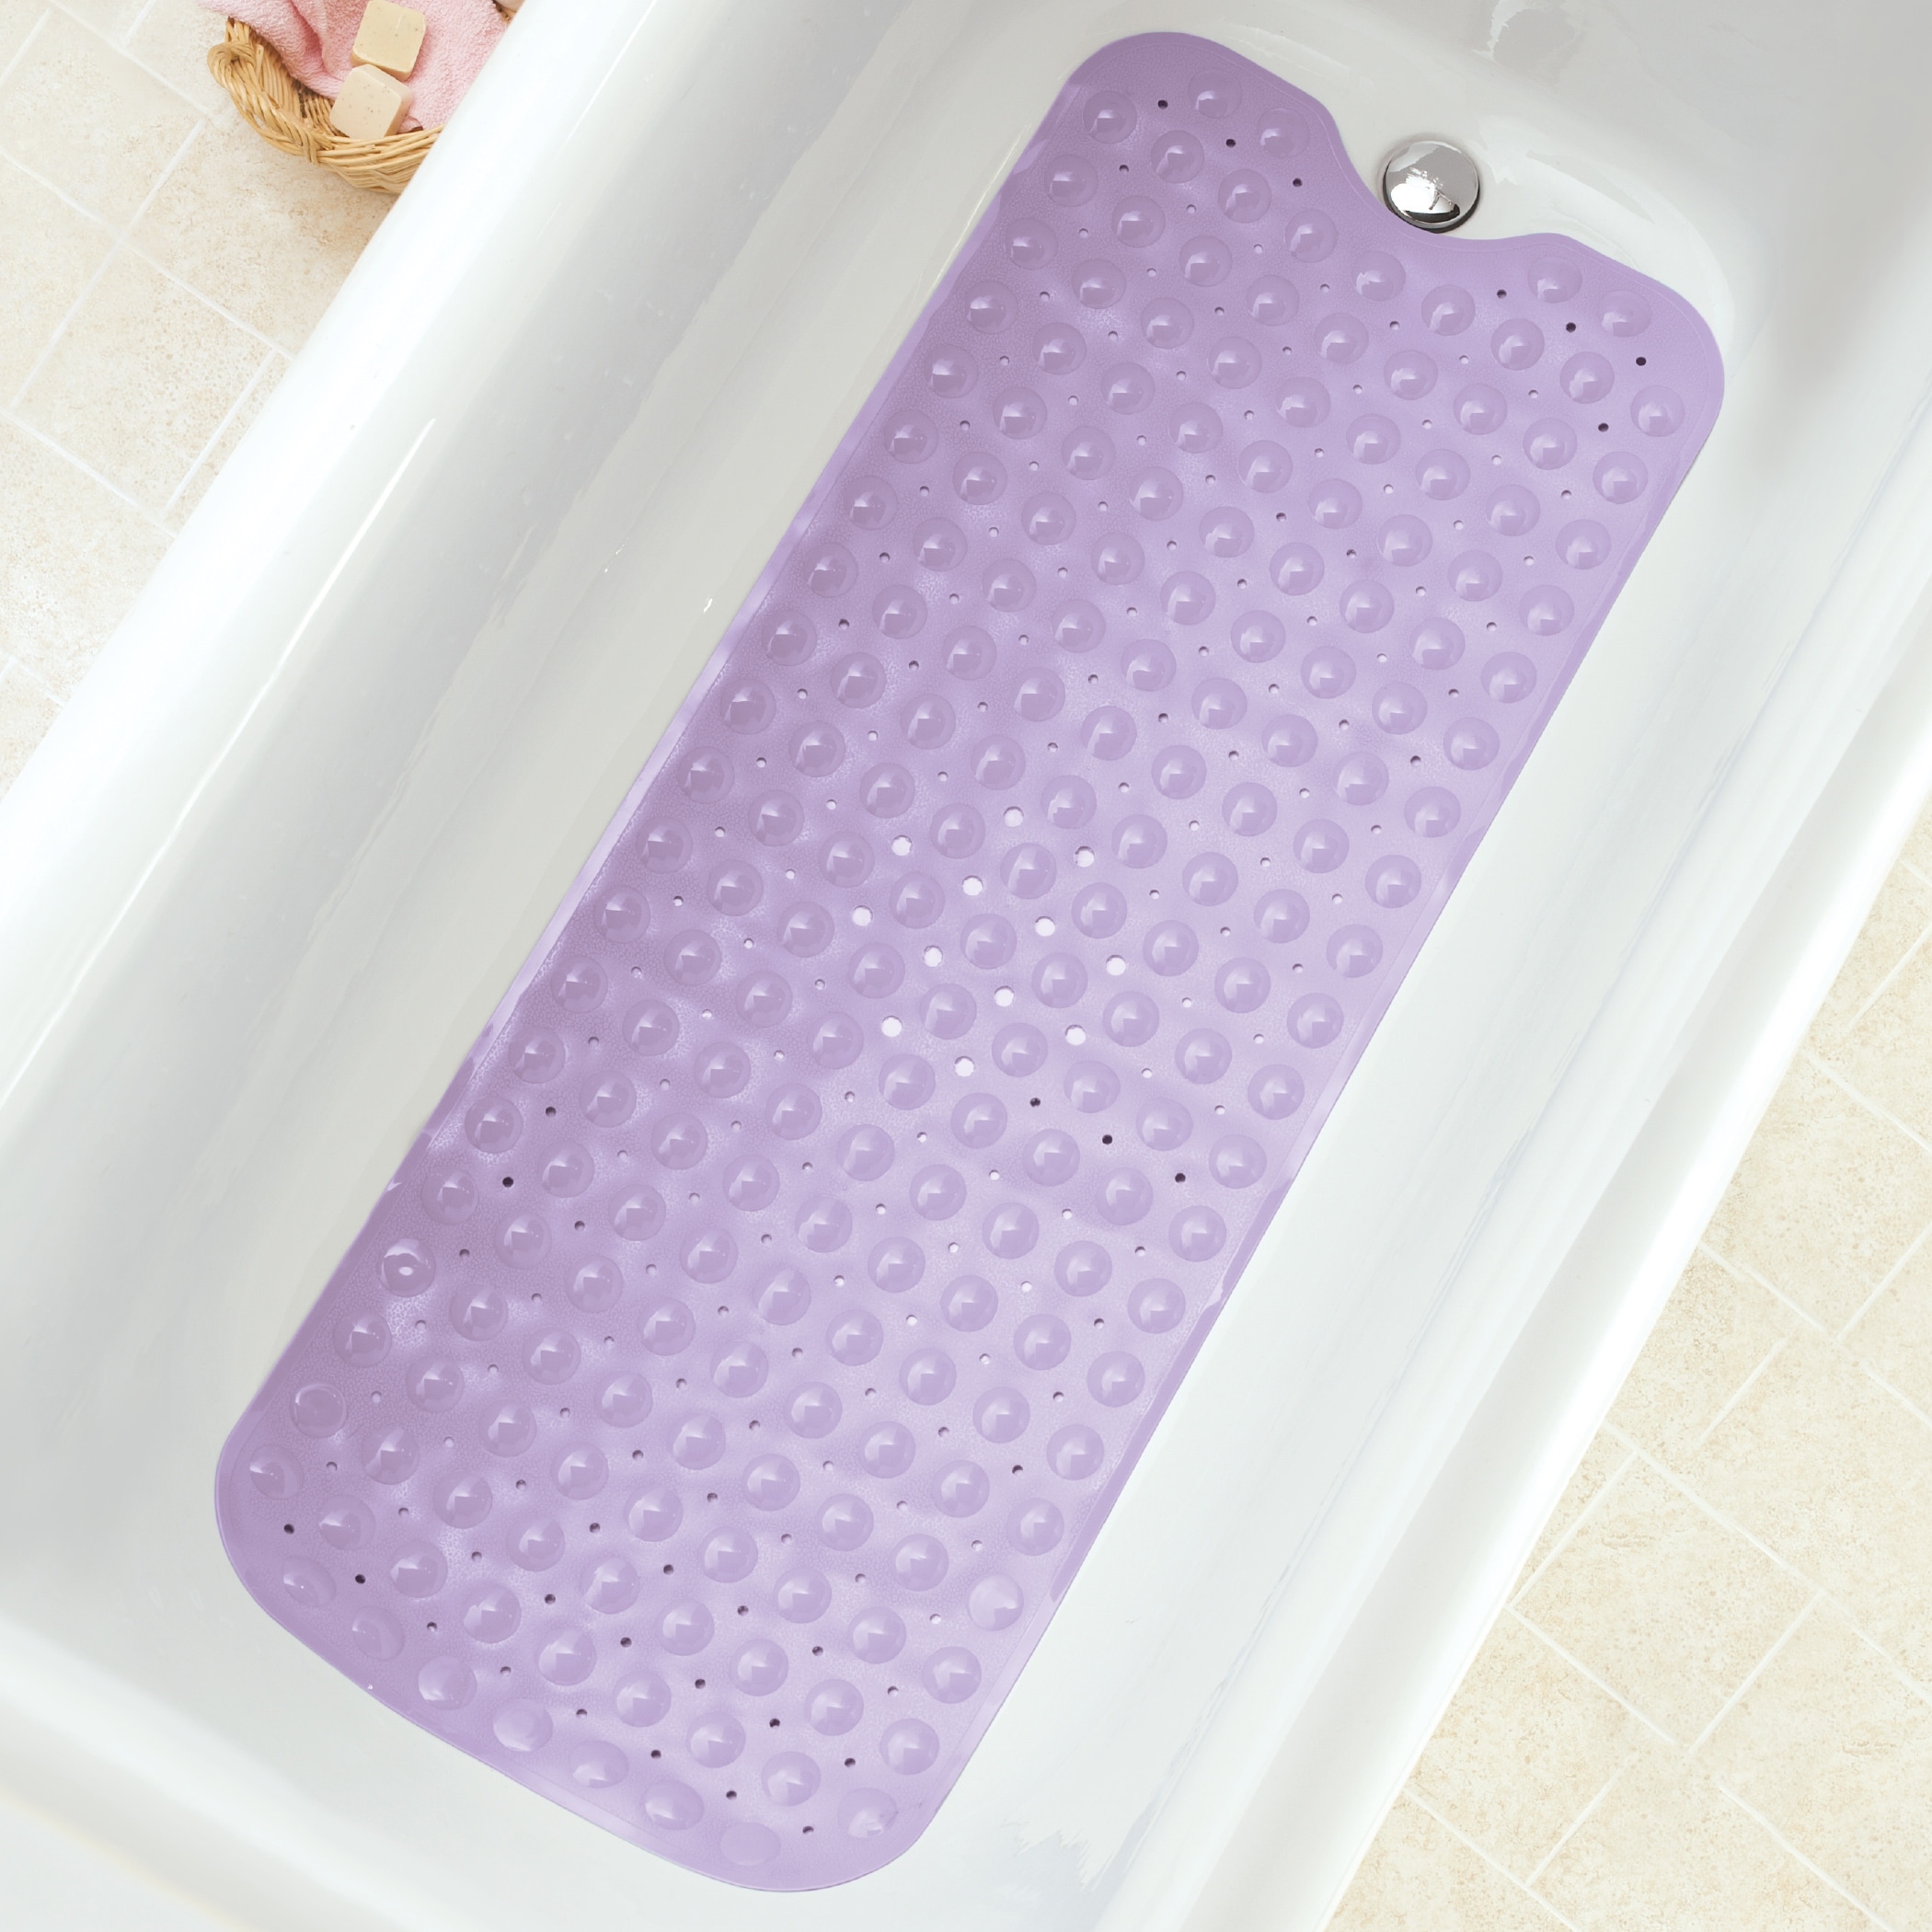 Extra Long Bath Mats: Non-Slip Bathub Mat